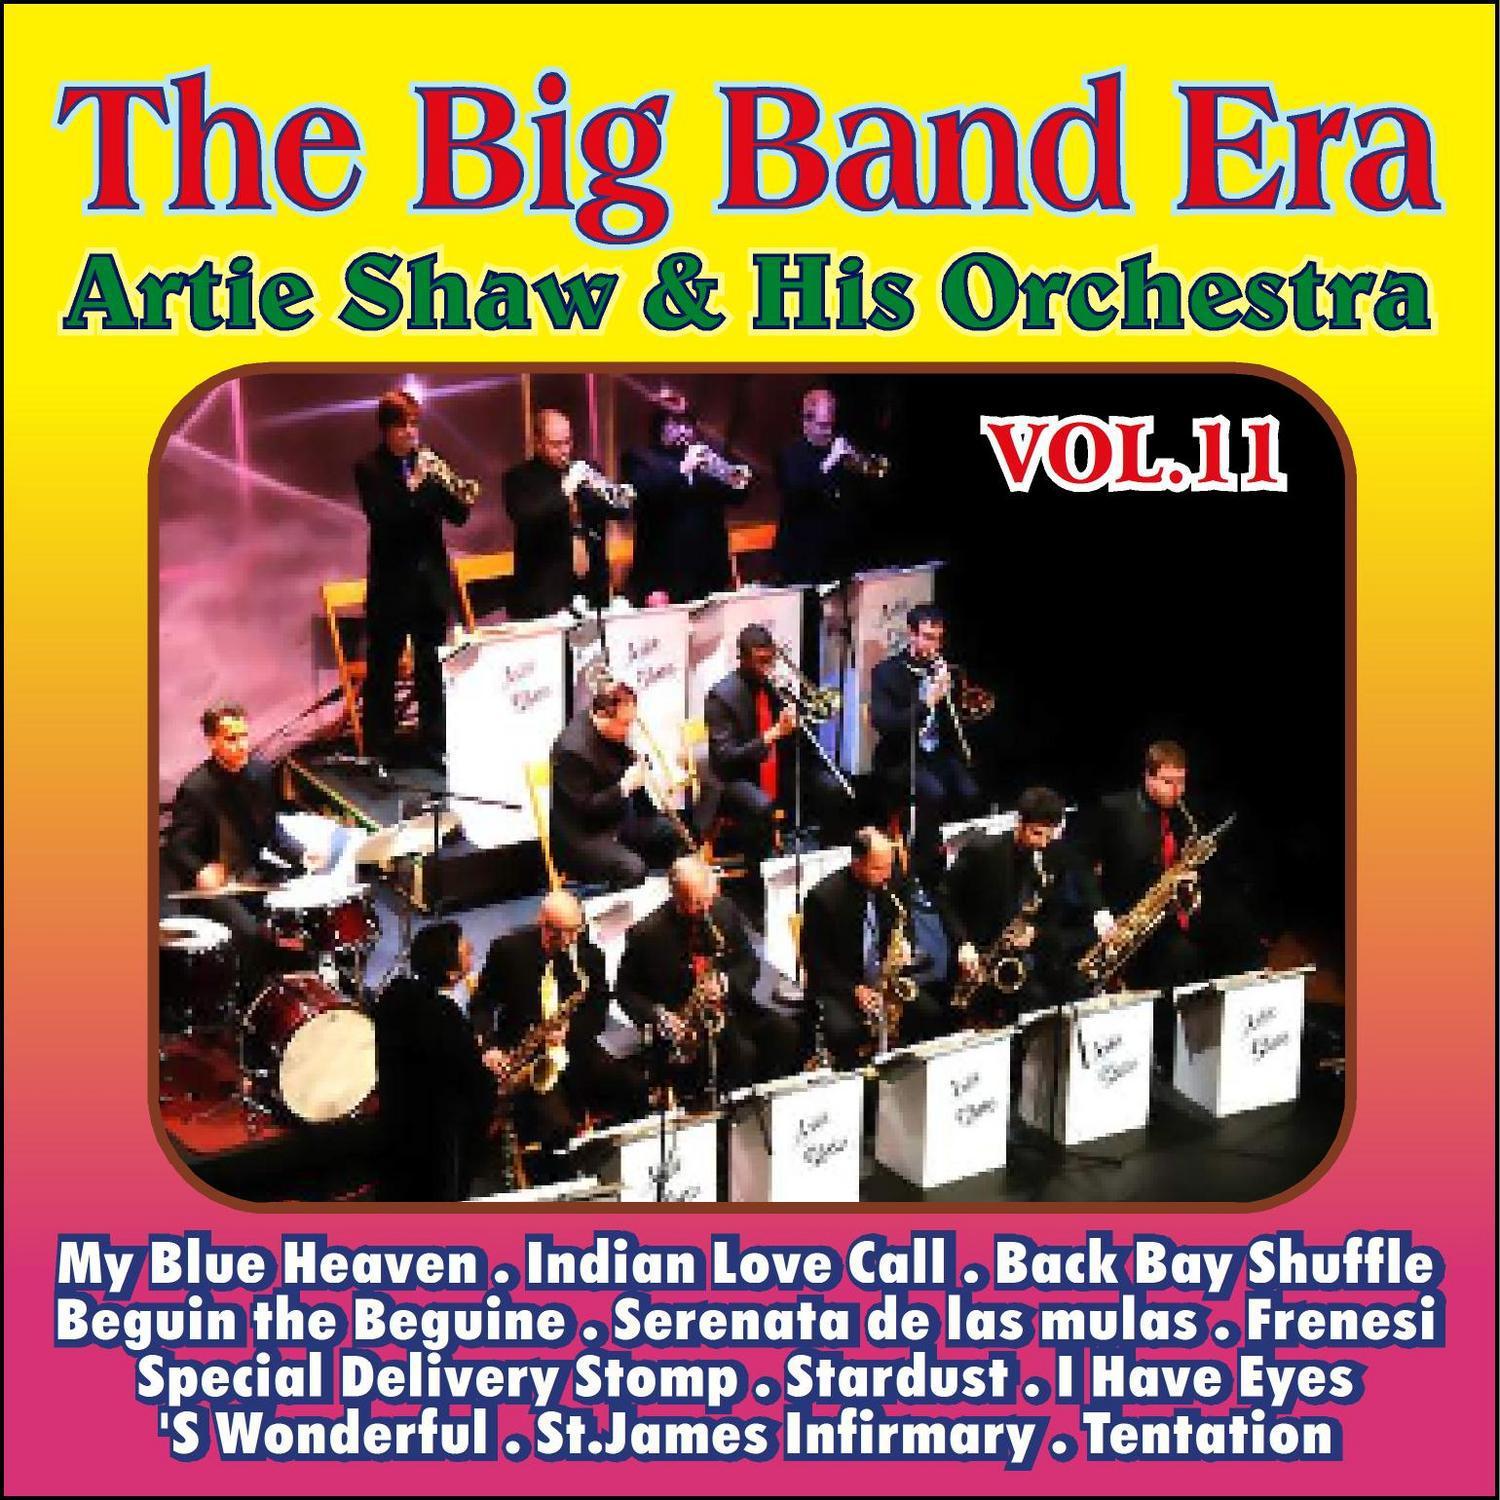 Giants of the Big Band Era Vol. XI